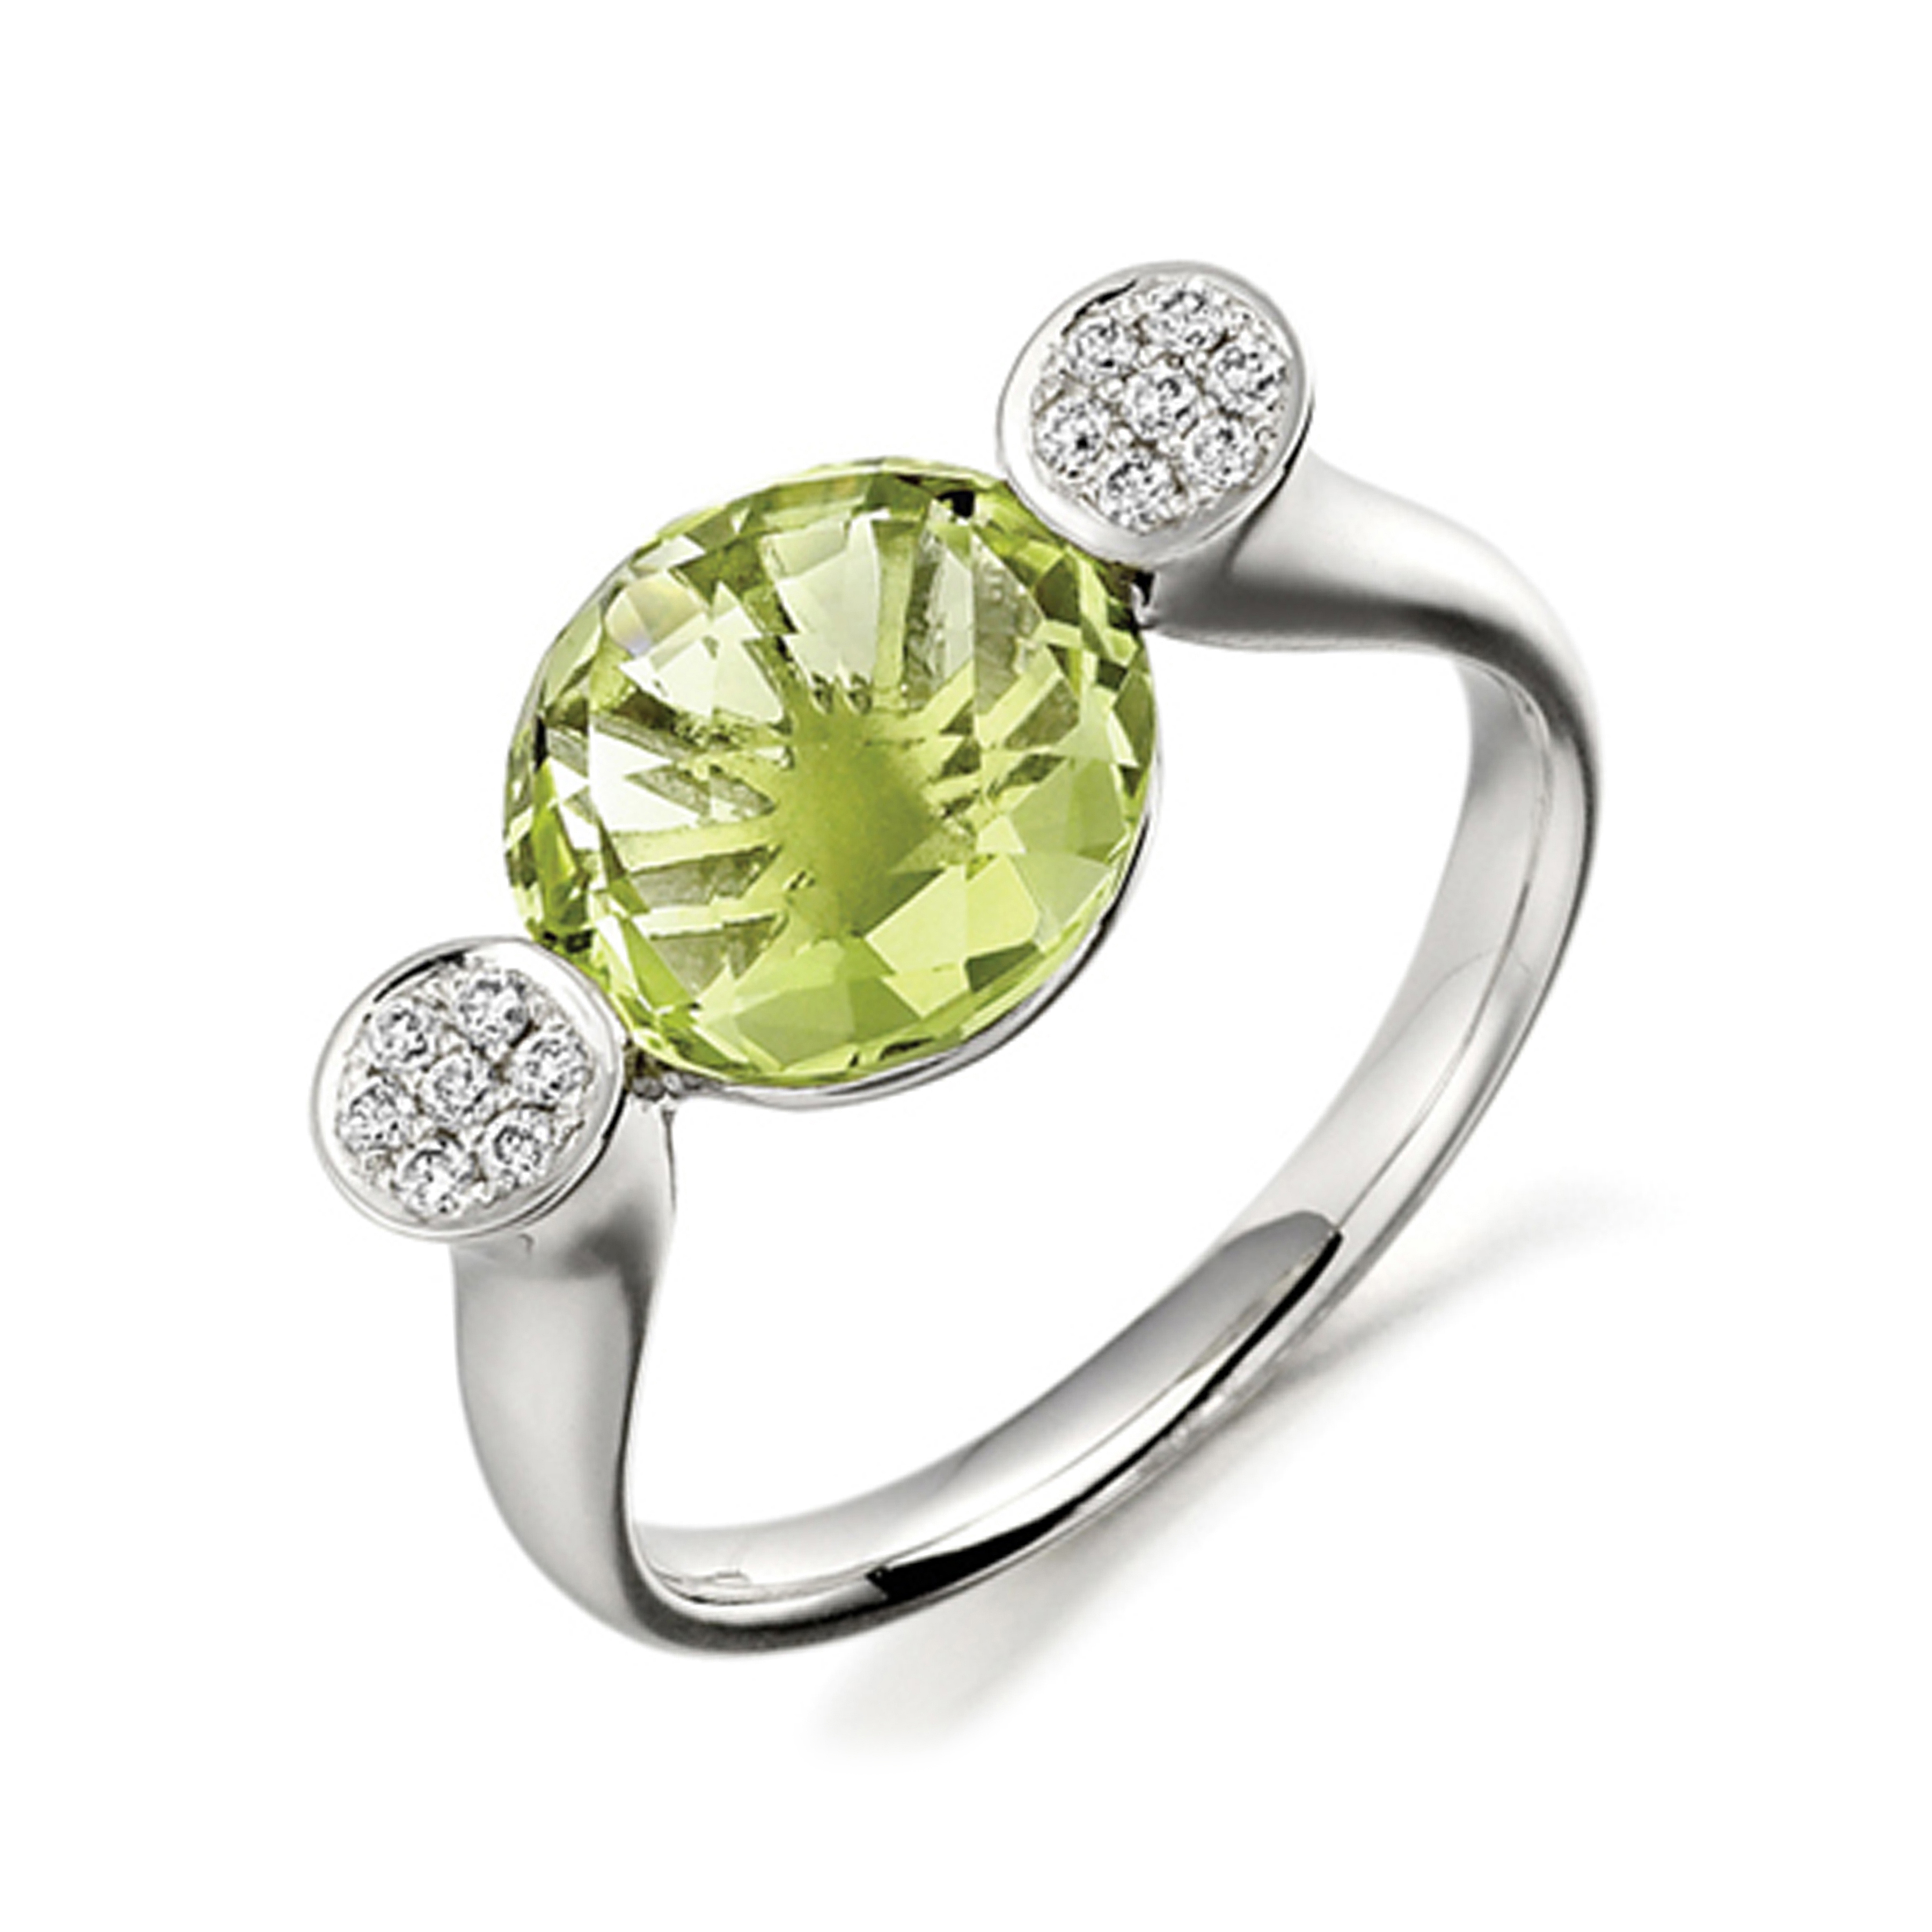 10mm Round Quartz Stones Side Stone Shoulder Diamond And Gemstone Engagement Ring